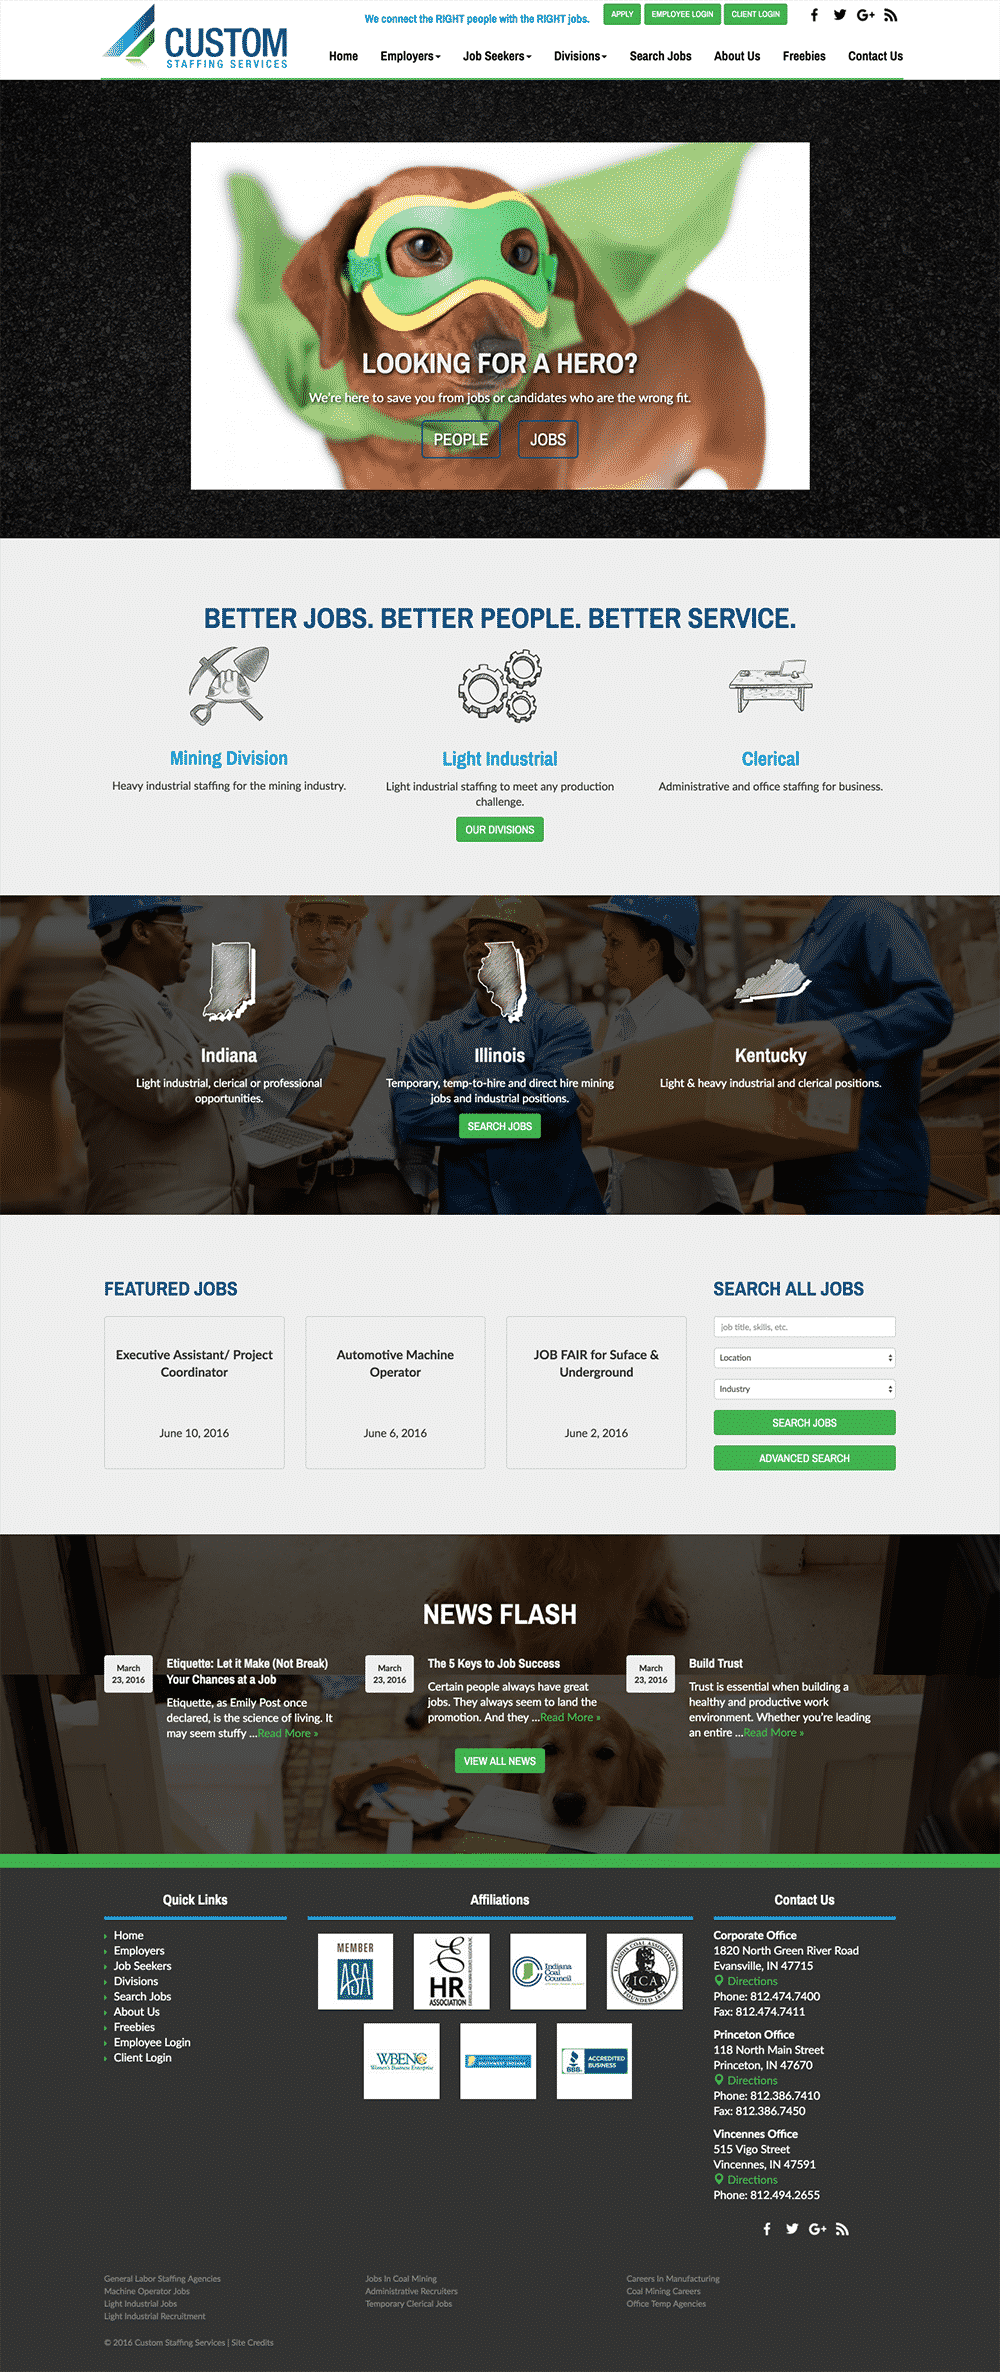 custom-staffing-website